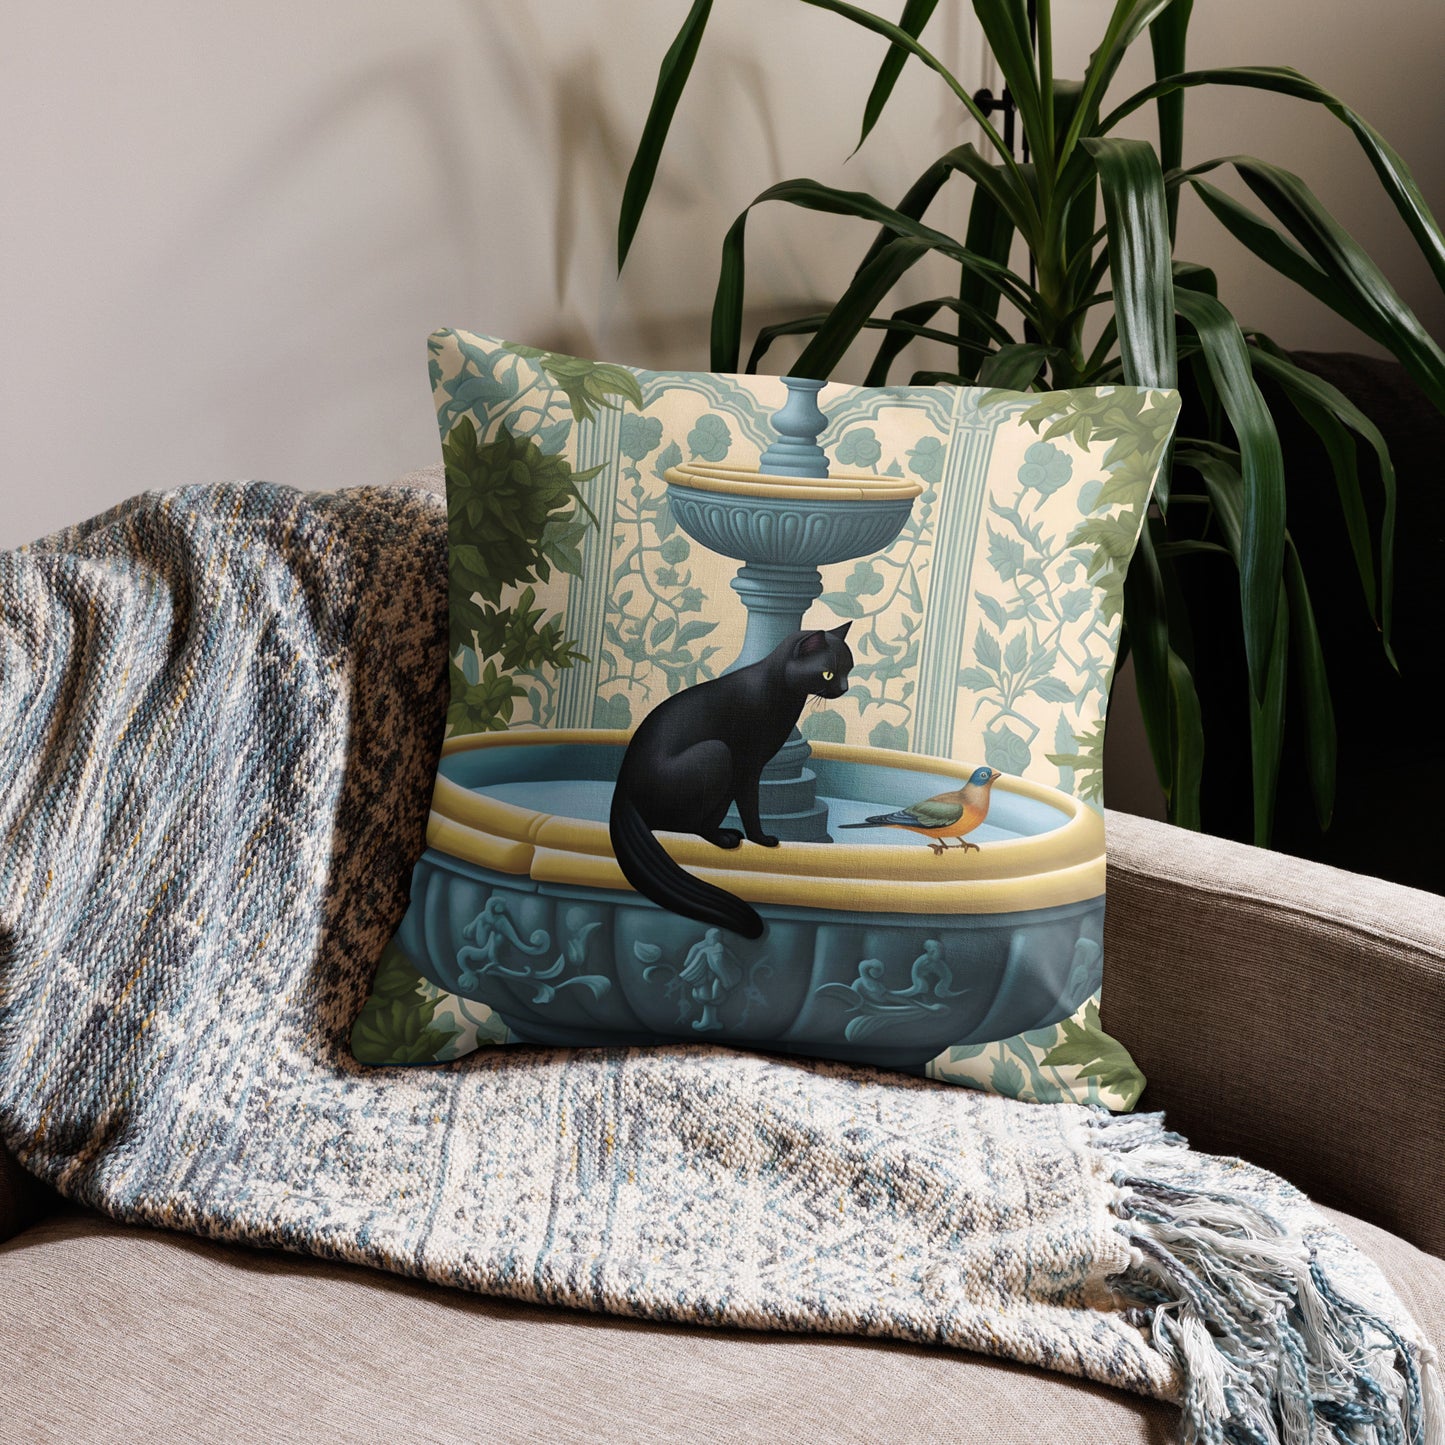 Gypsy - Black Cat on a Birdbath  Pillow